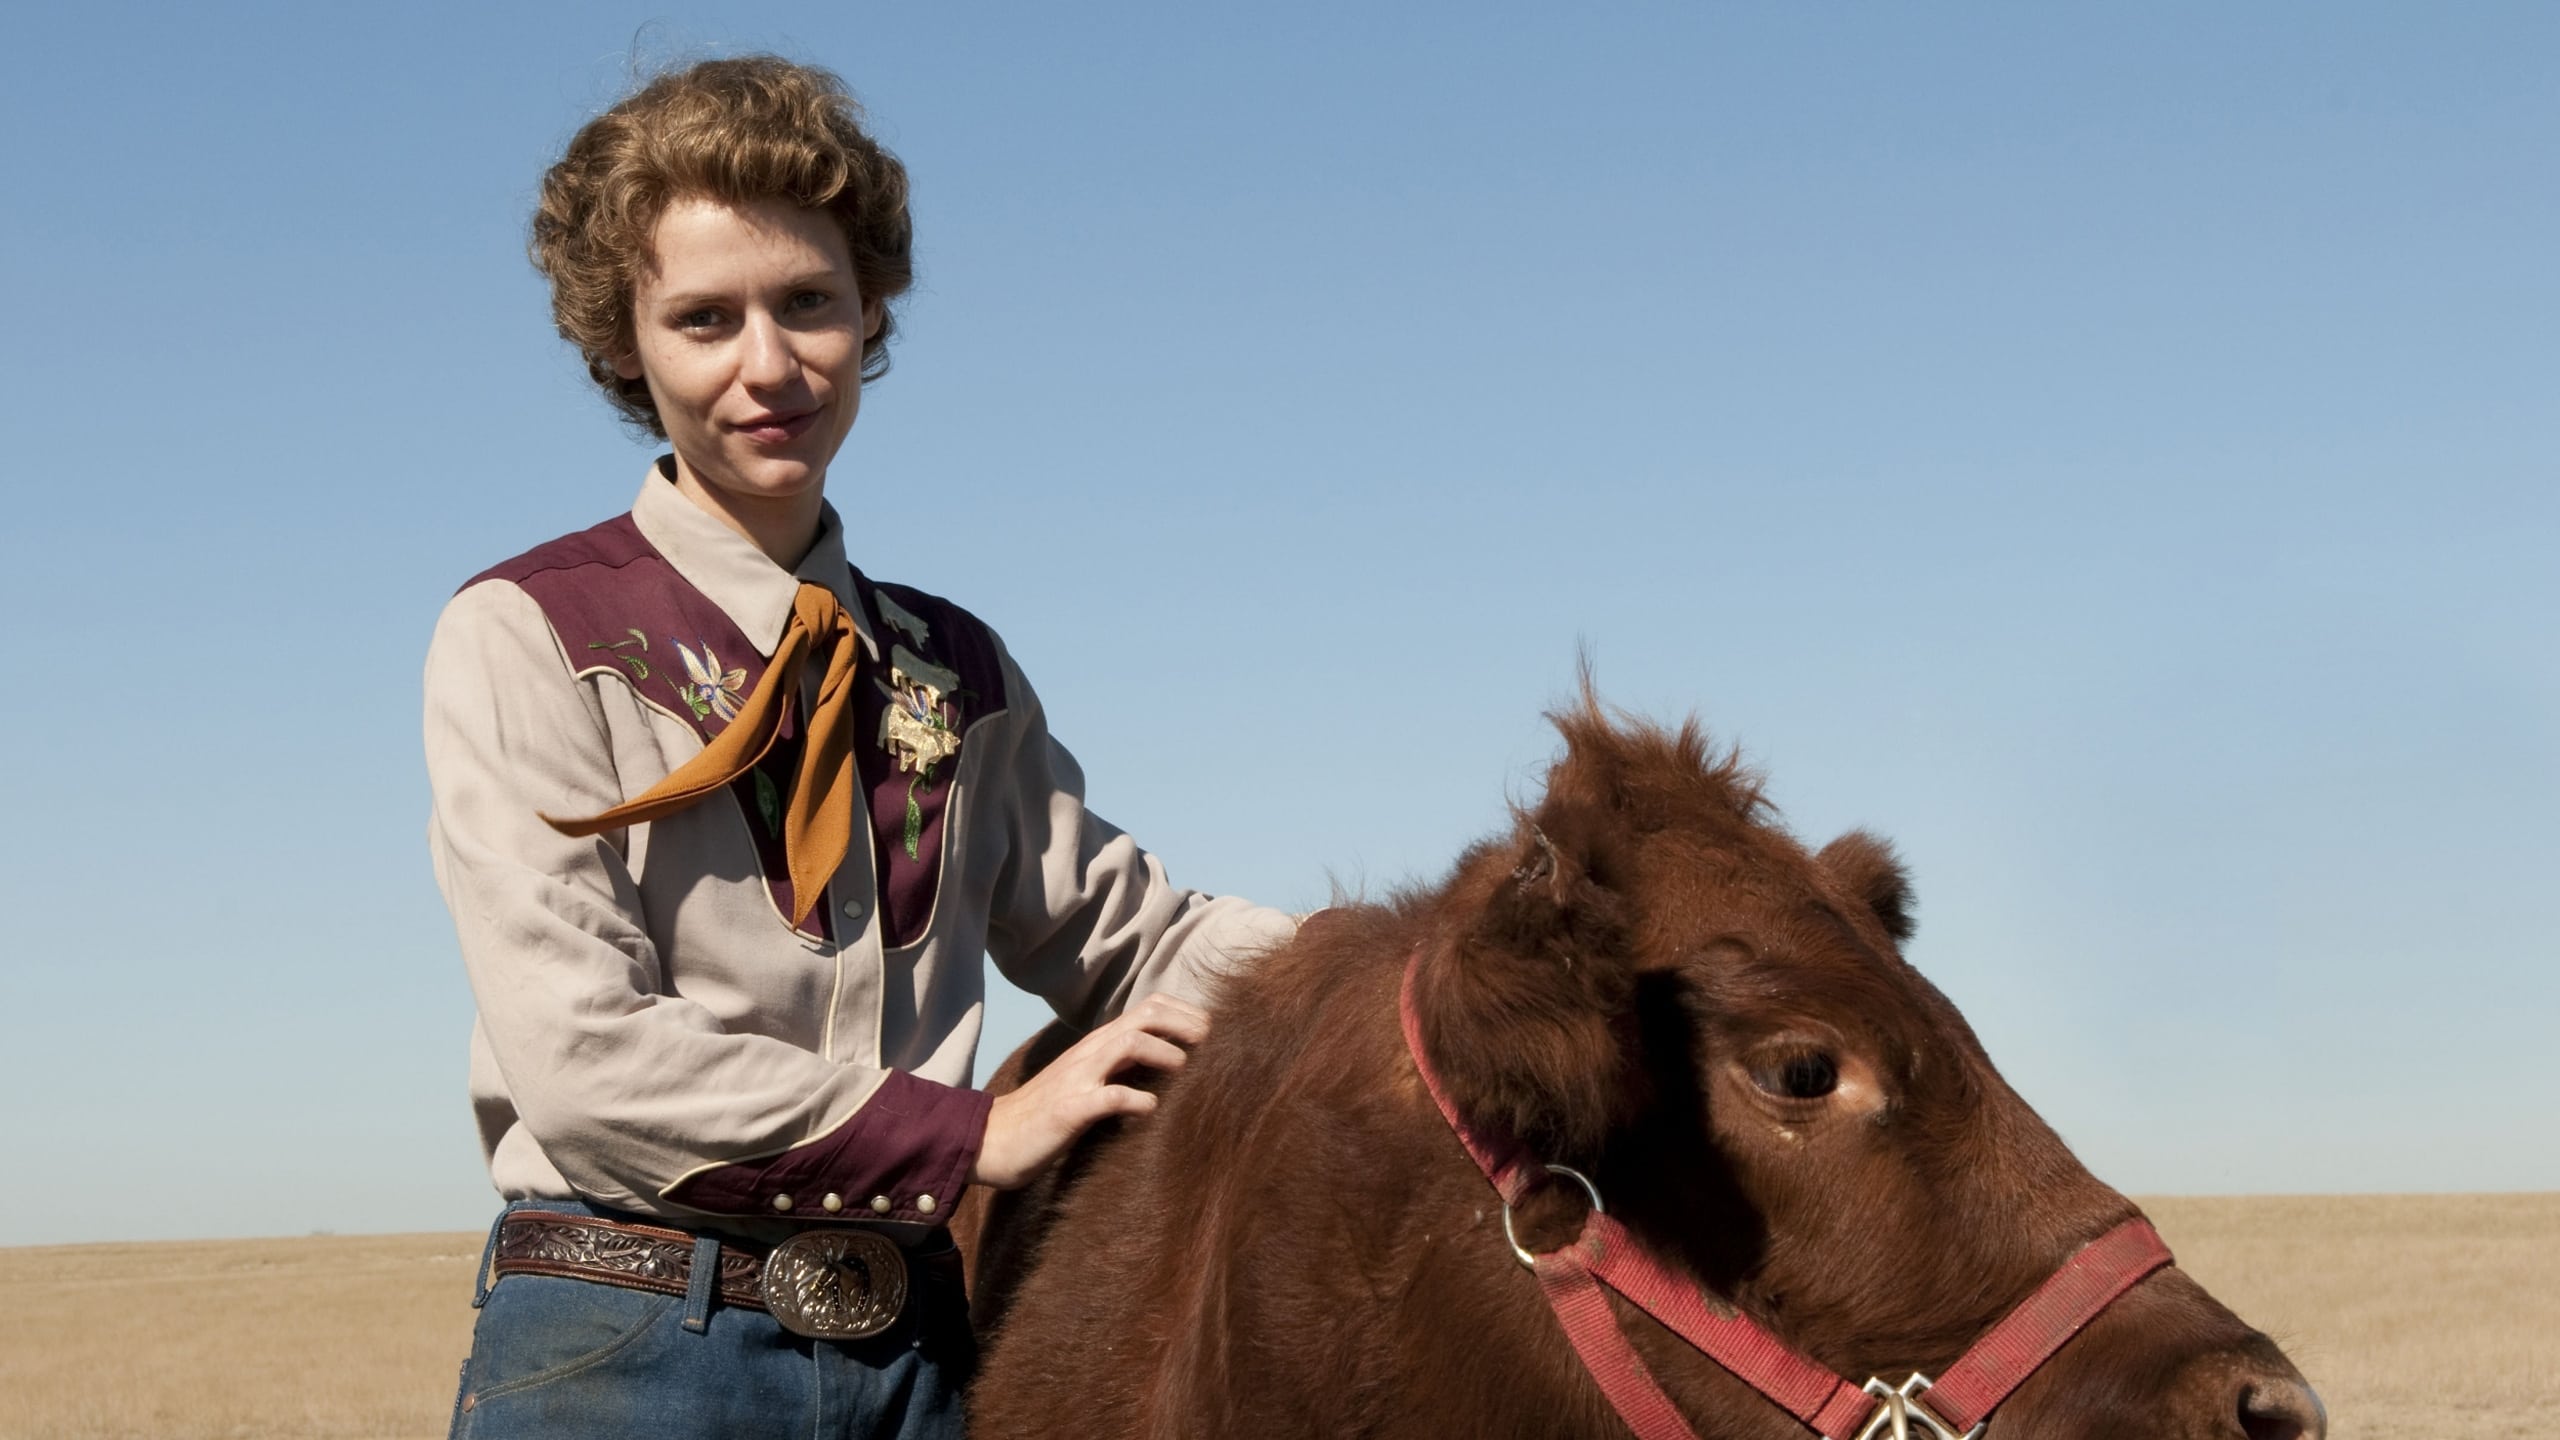 Temple Grandin 2010 123movies